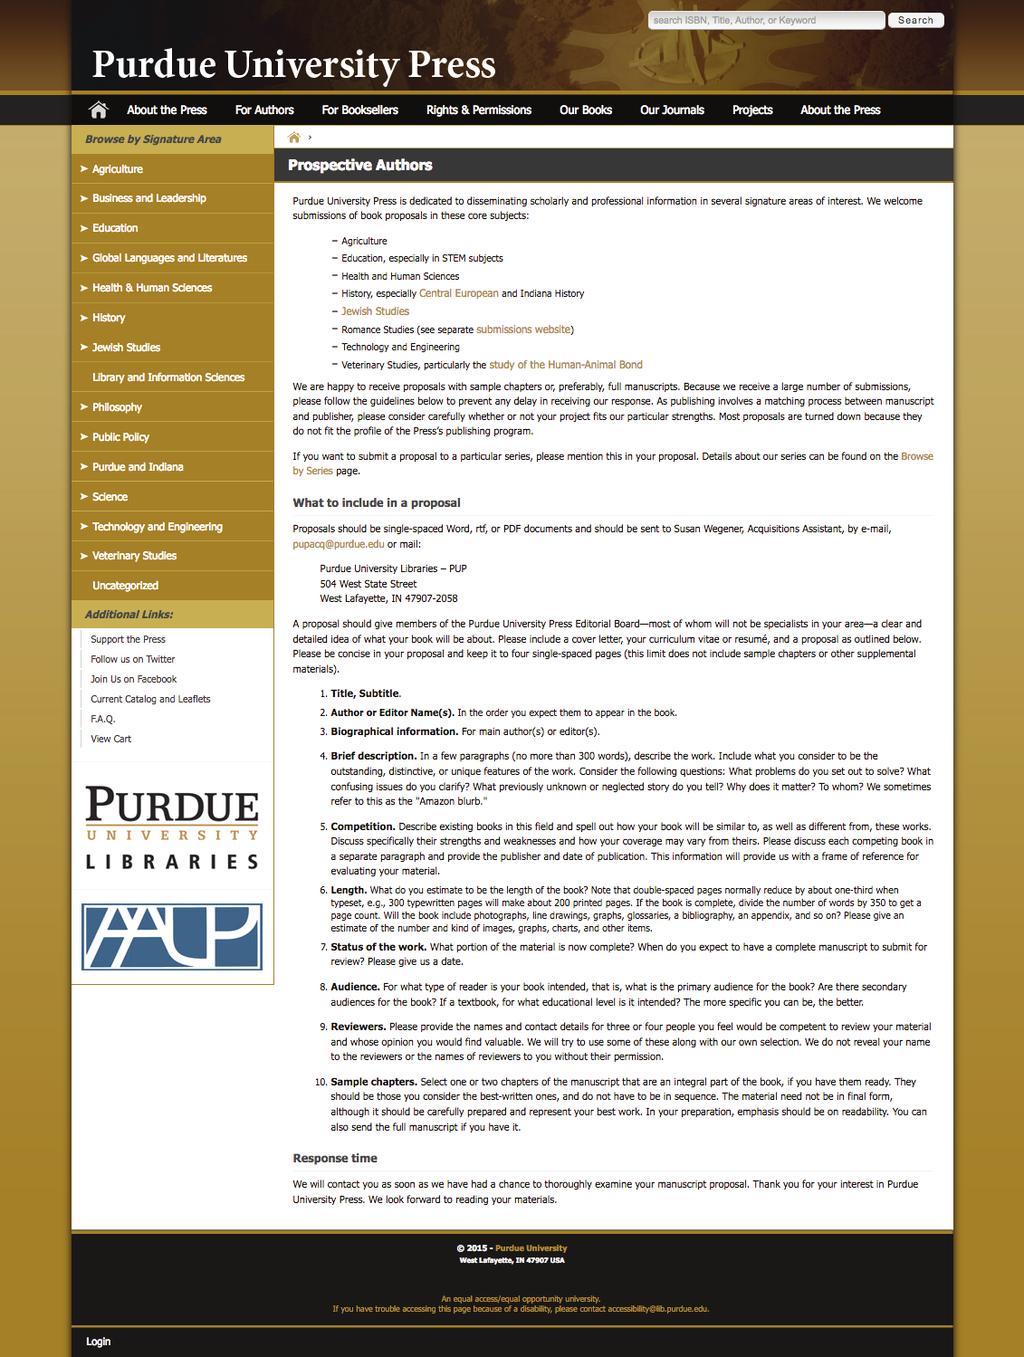 PURDUE UNIVERSITY LIBRARIES Purdue University Press Prospective Authors http://www.thepress.